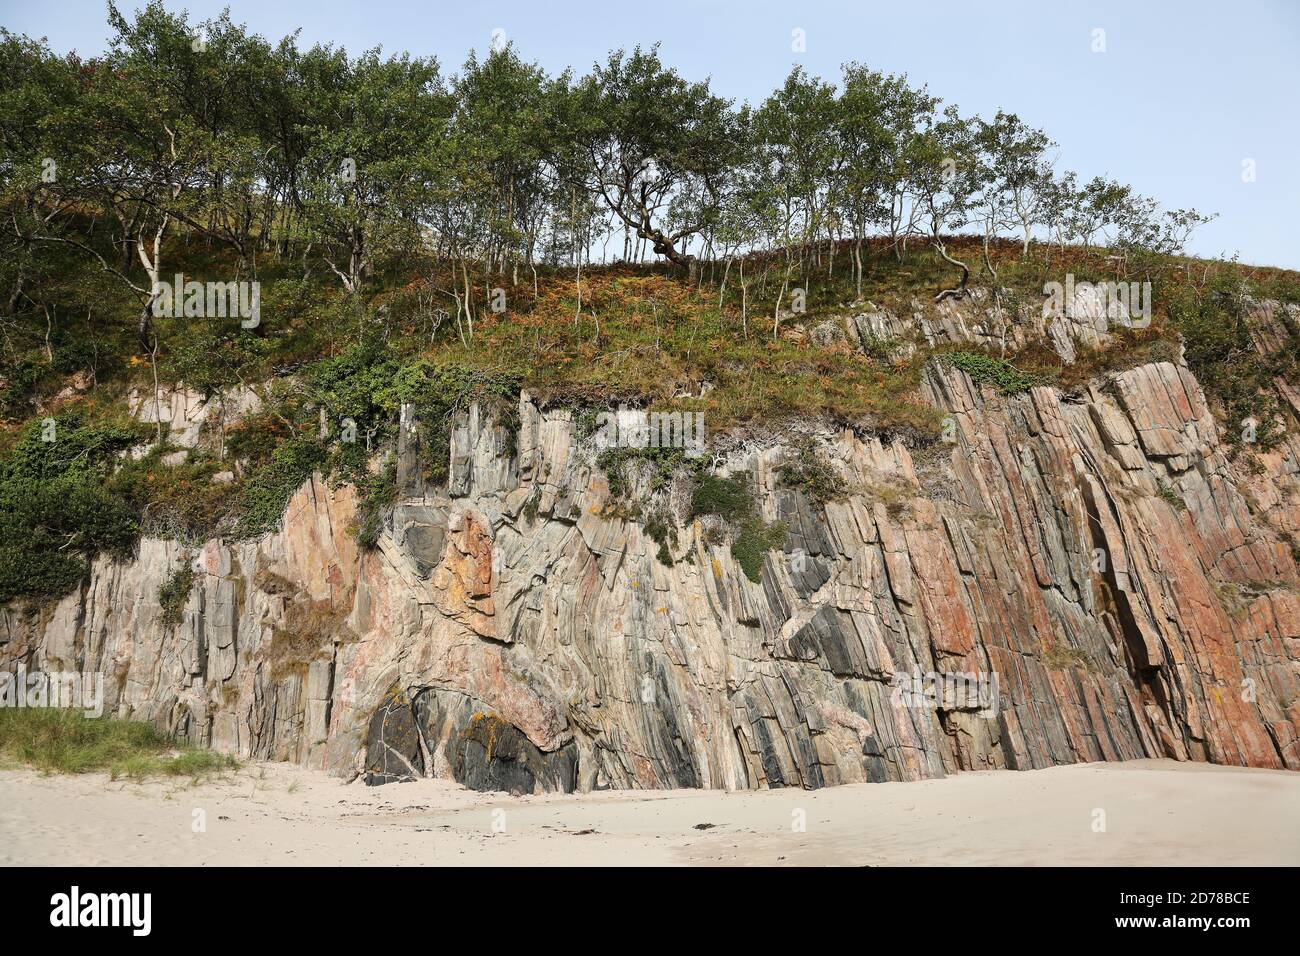 Lewisian Gness Rocks con una struttura Boudin 'Hour-Glass' al suo interno, Ceannabeinne Beach, Durness, Sutherland, North Coast of Scotland, UK Foto Stock